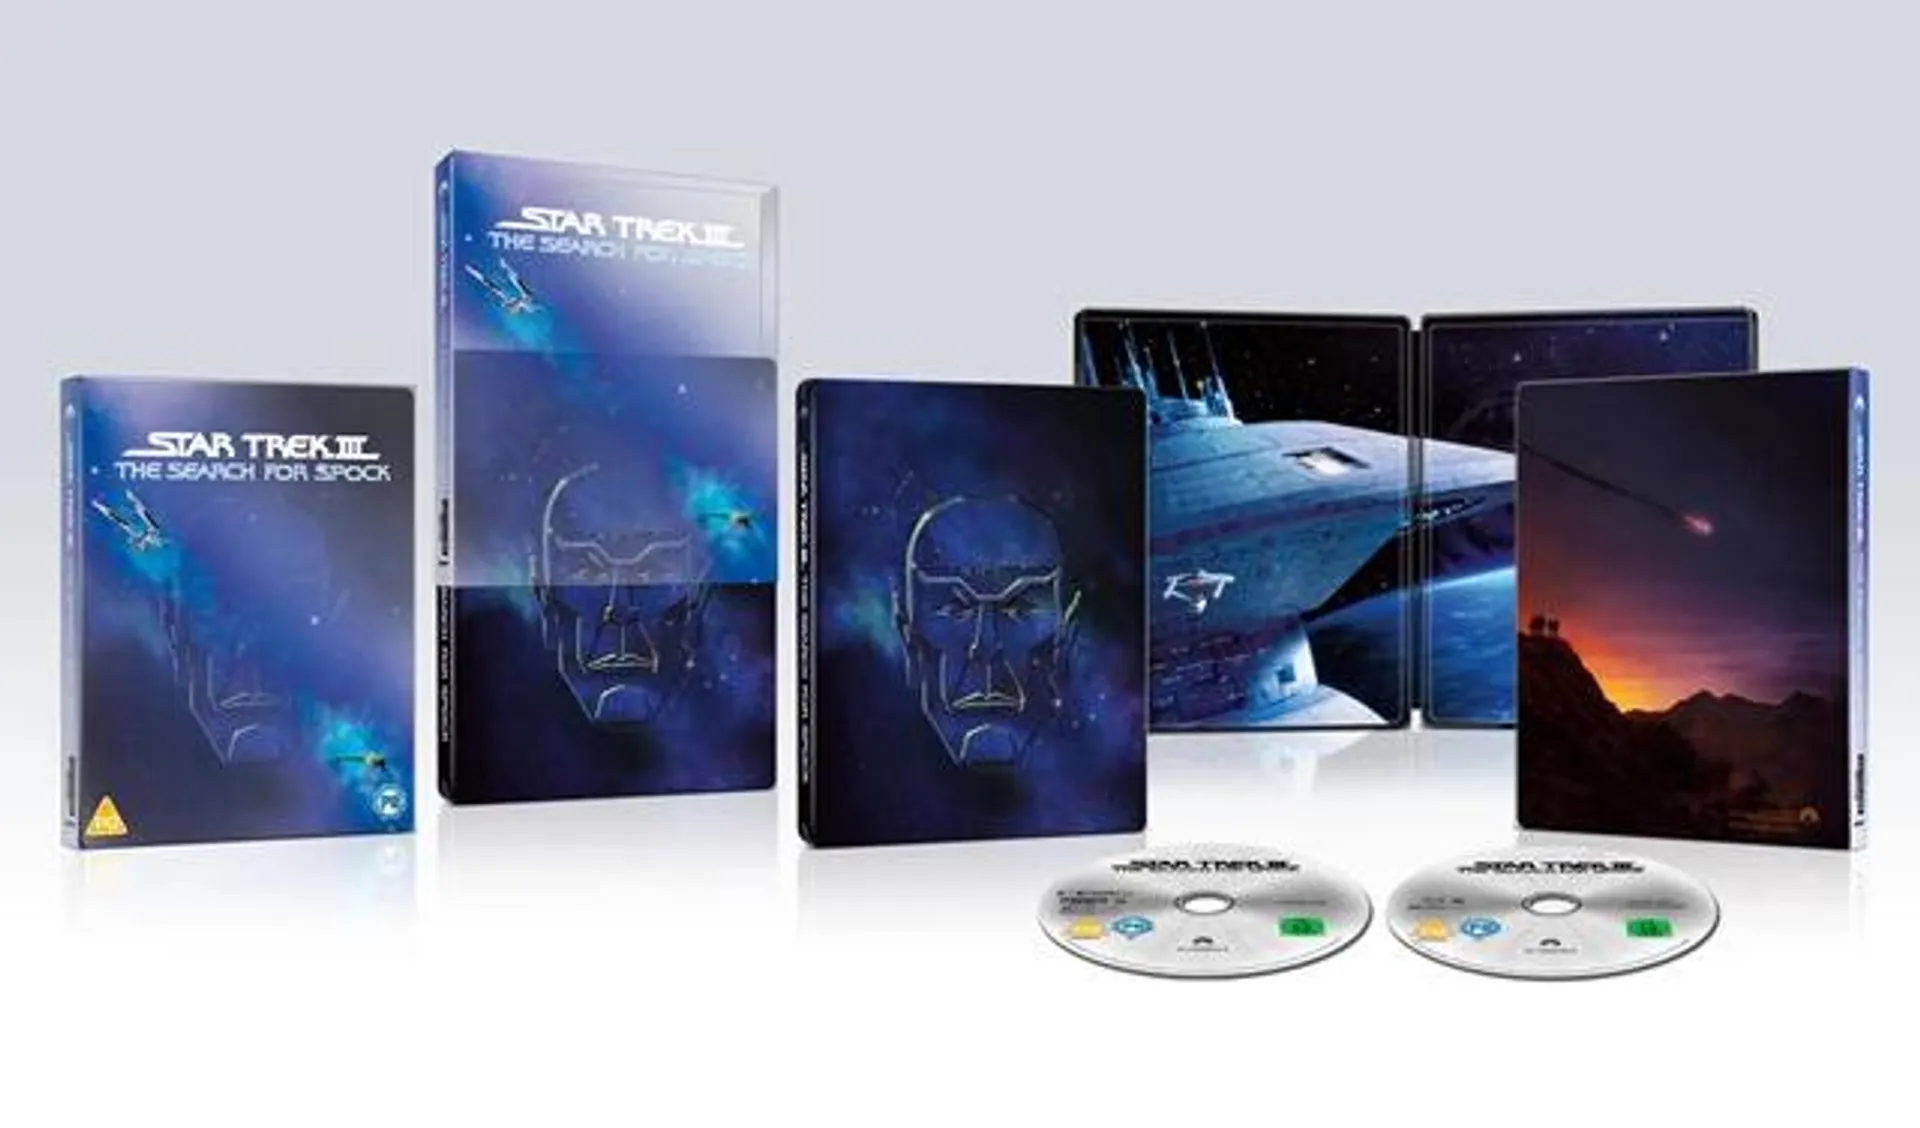 Star Trek III - The Search for Spock Limited Edition 4K Ultra HD Steelbook